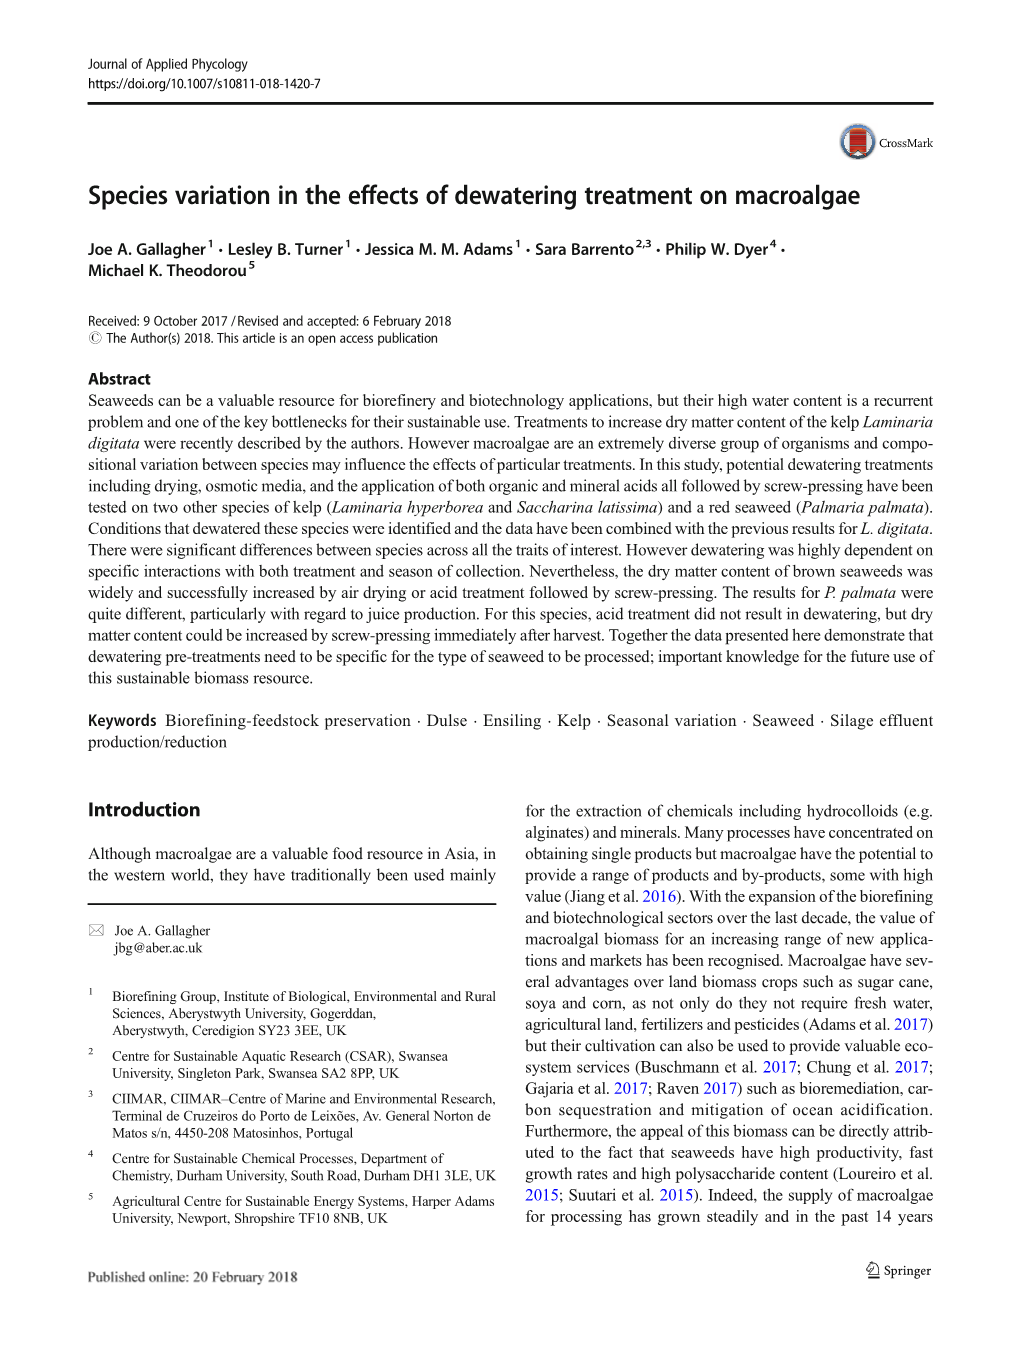 Species Variation in the Effects of Dewatering Treatment on Macroalgae